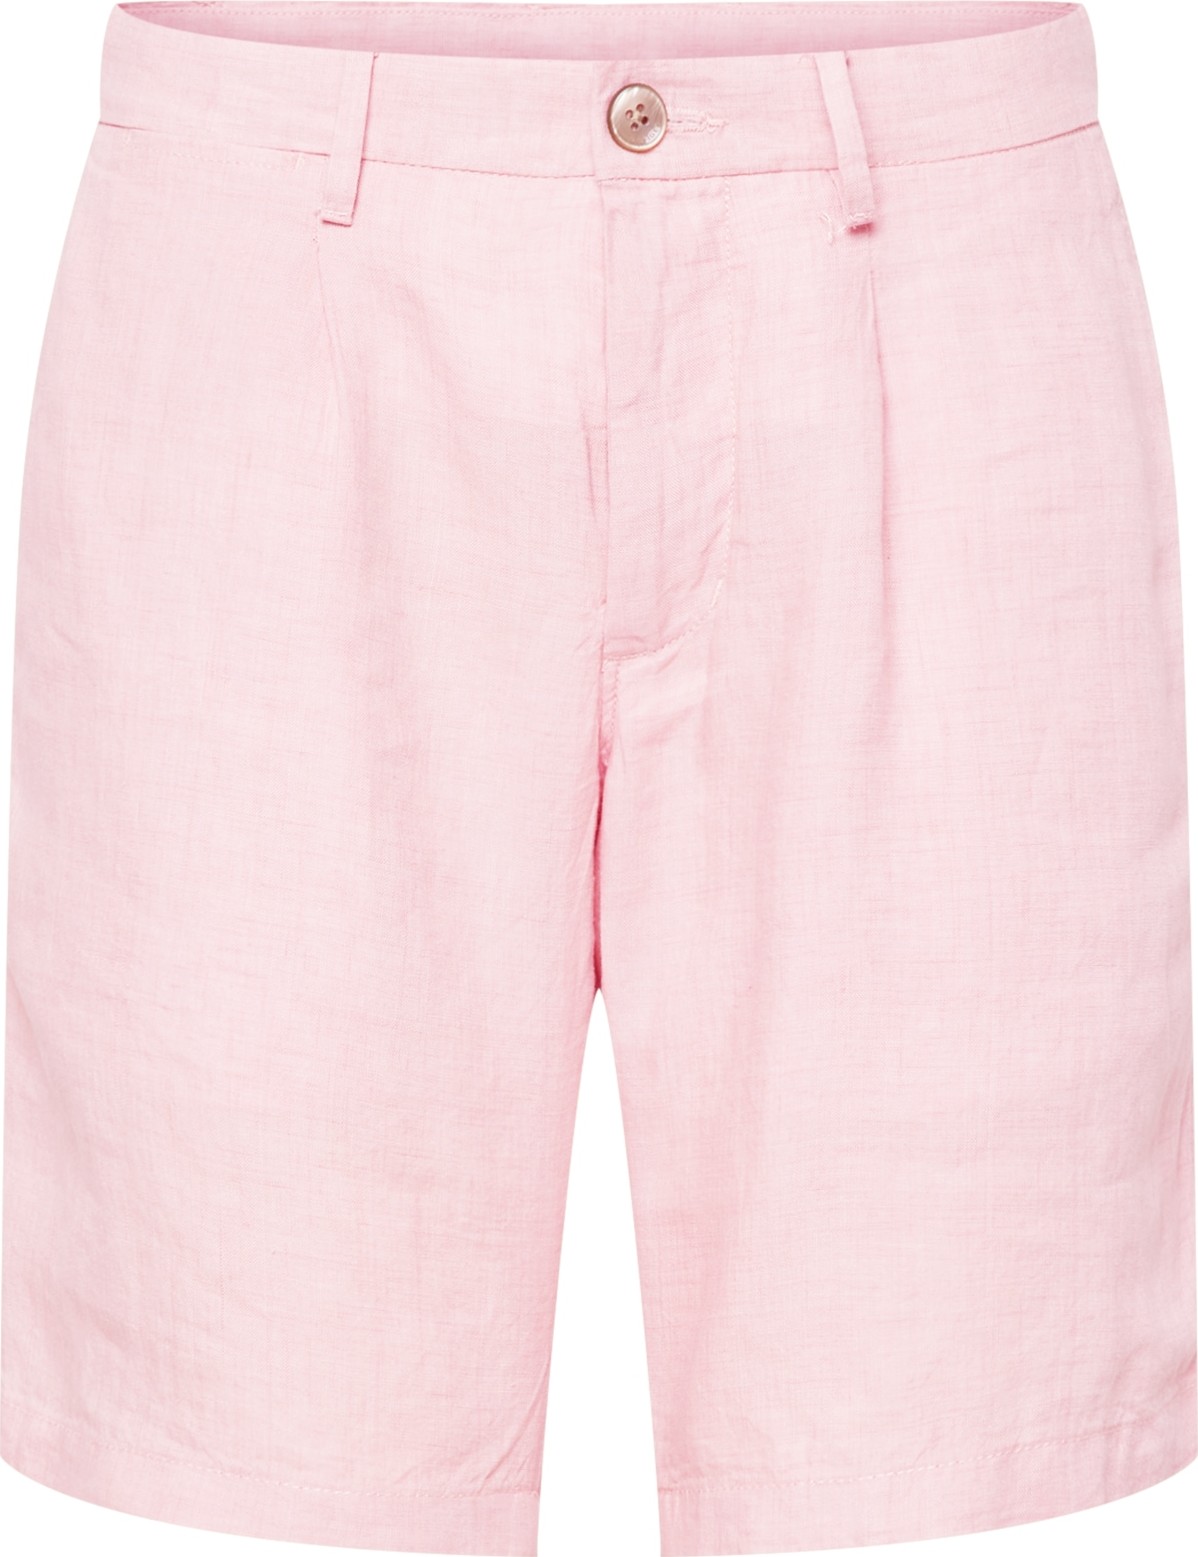 TOMMY HILFIGER Kalhoty se sklady v pase 'Brooklyn' pink